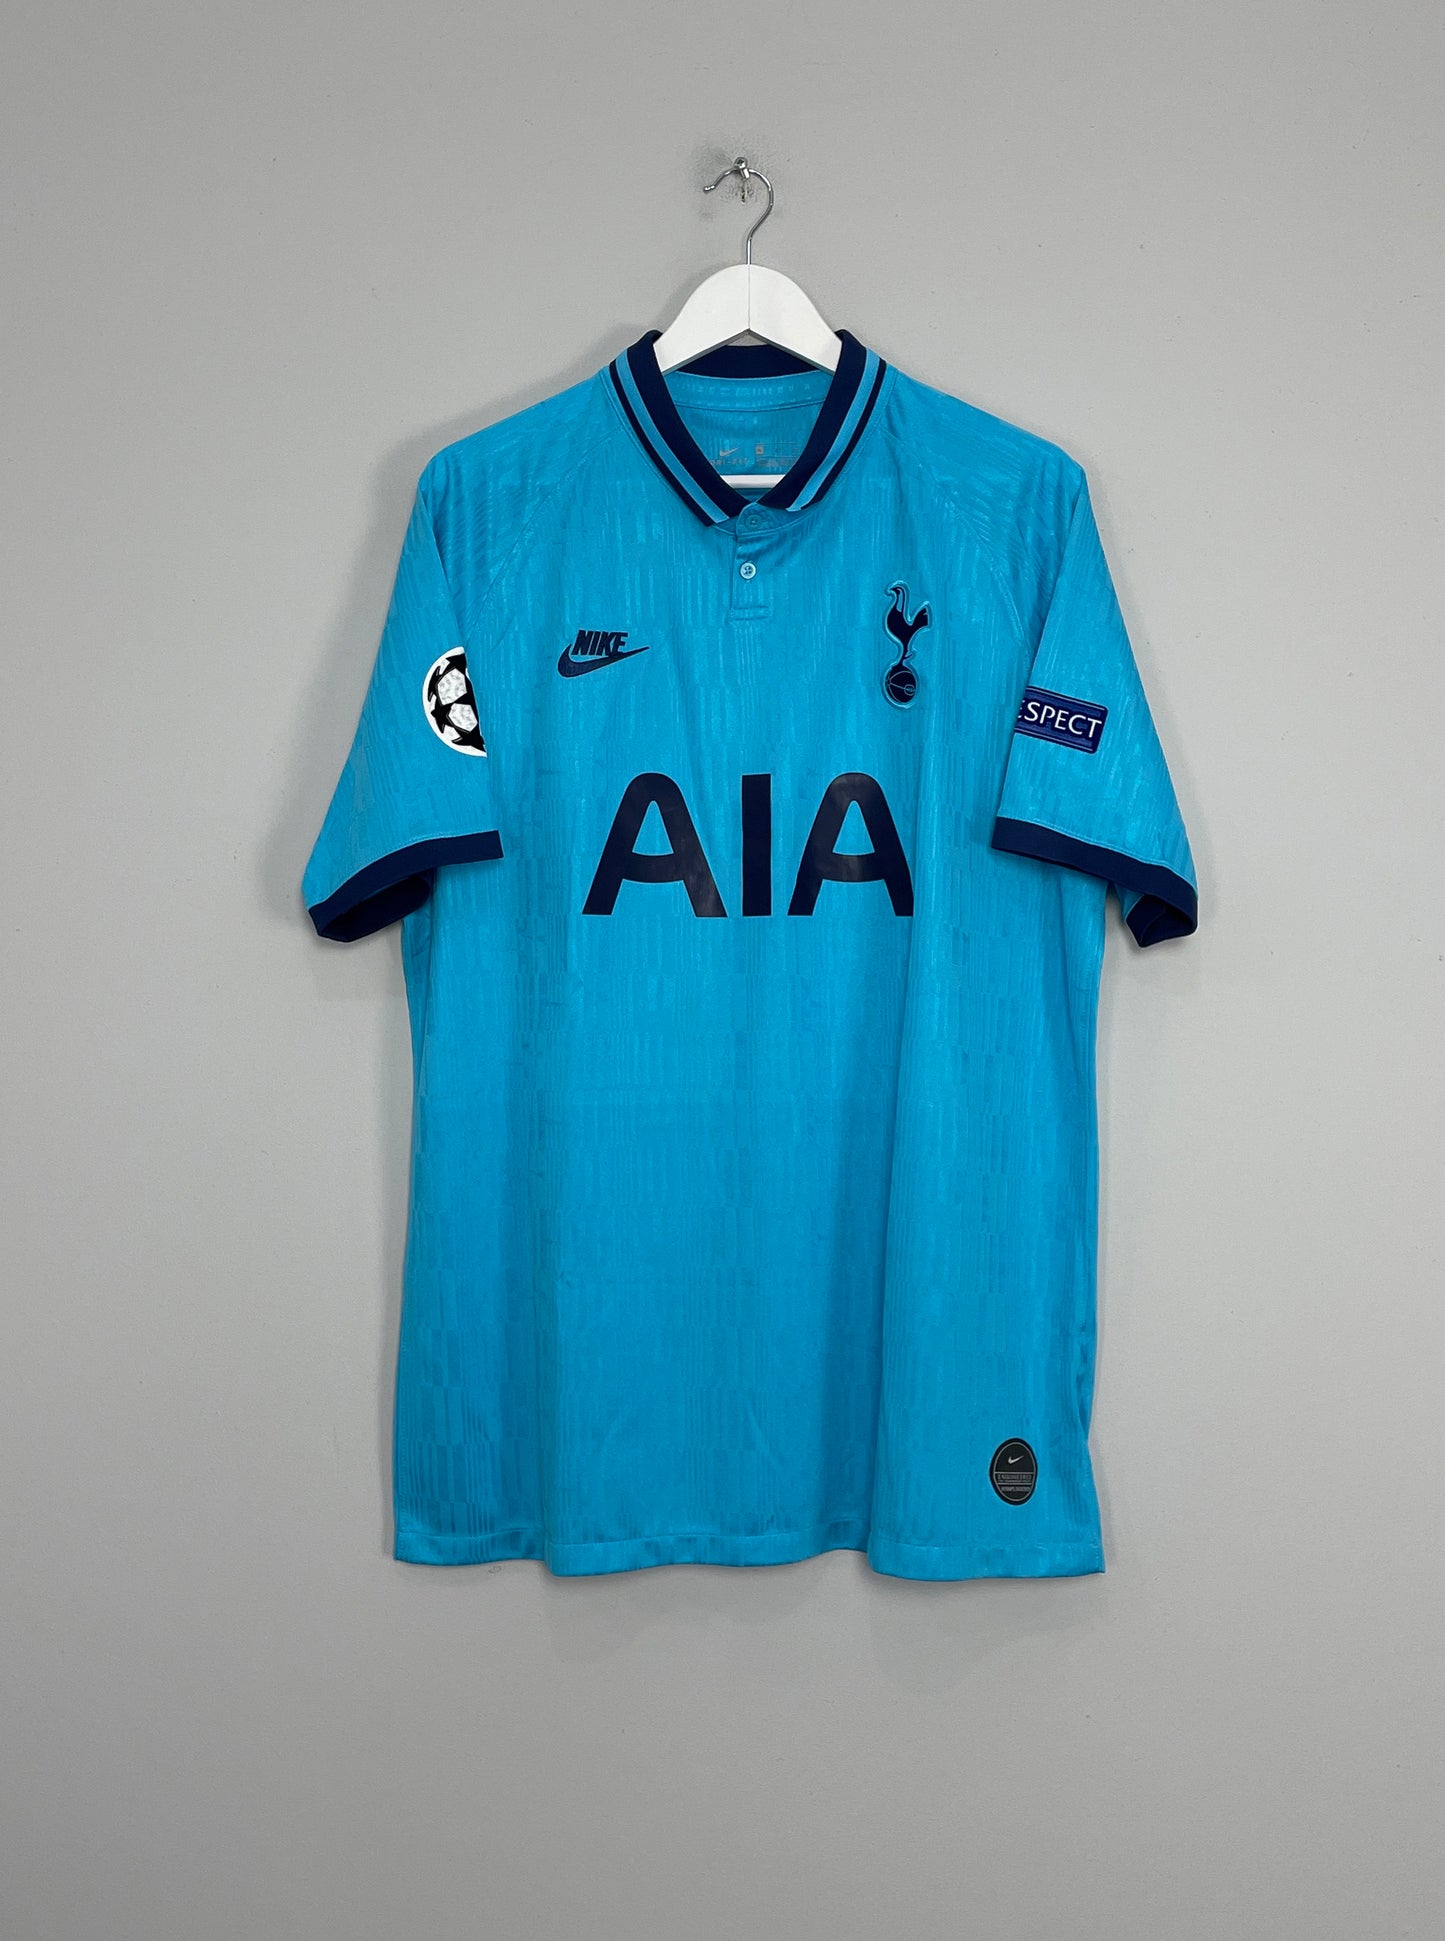 New Tottenham 2019/20 Nike home kit: Image of retro-inspired shirt sends  Spurs fans crazy 